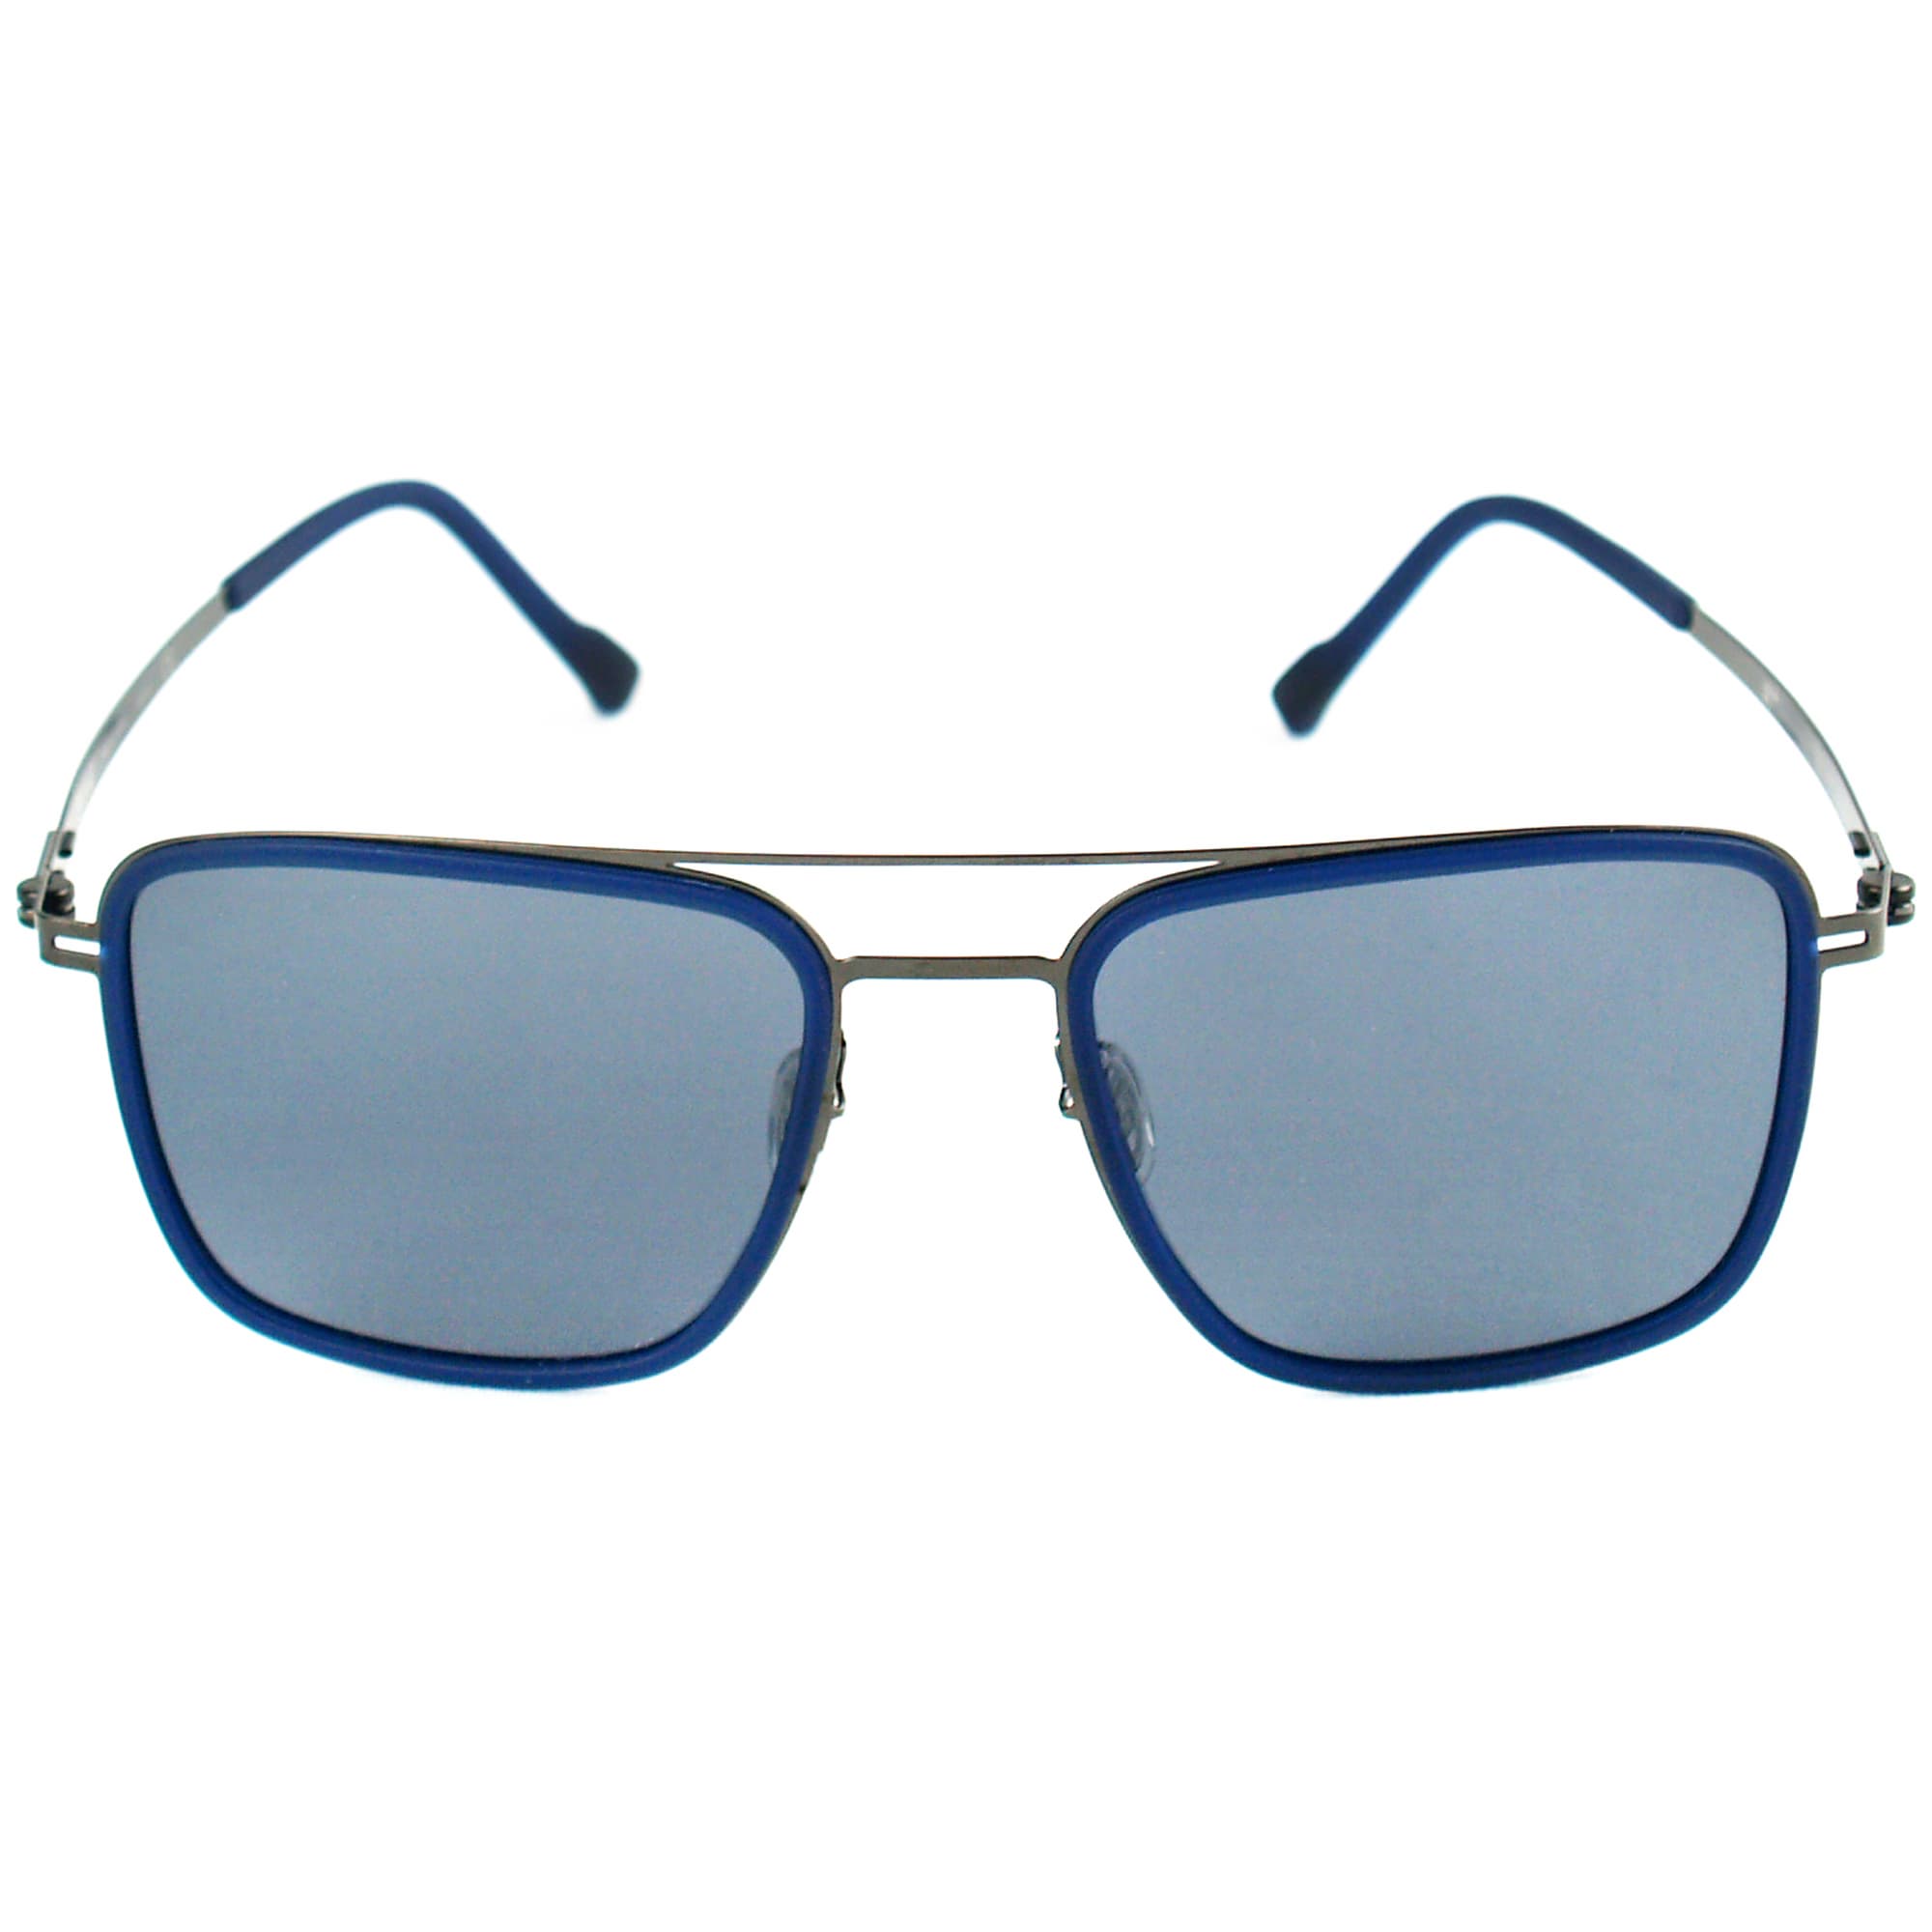 AviatorI Acetate _ Thin Stainless Steel  Frame Sunglasses